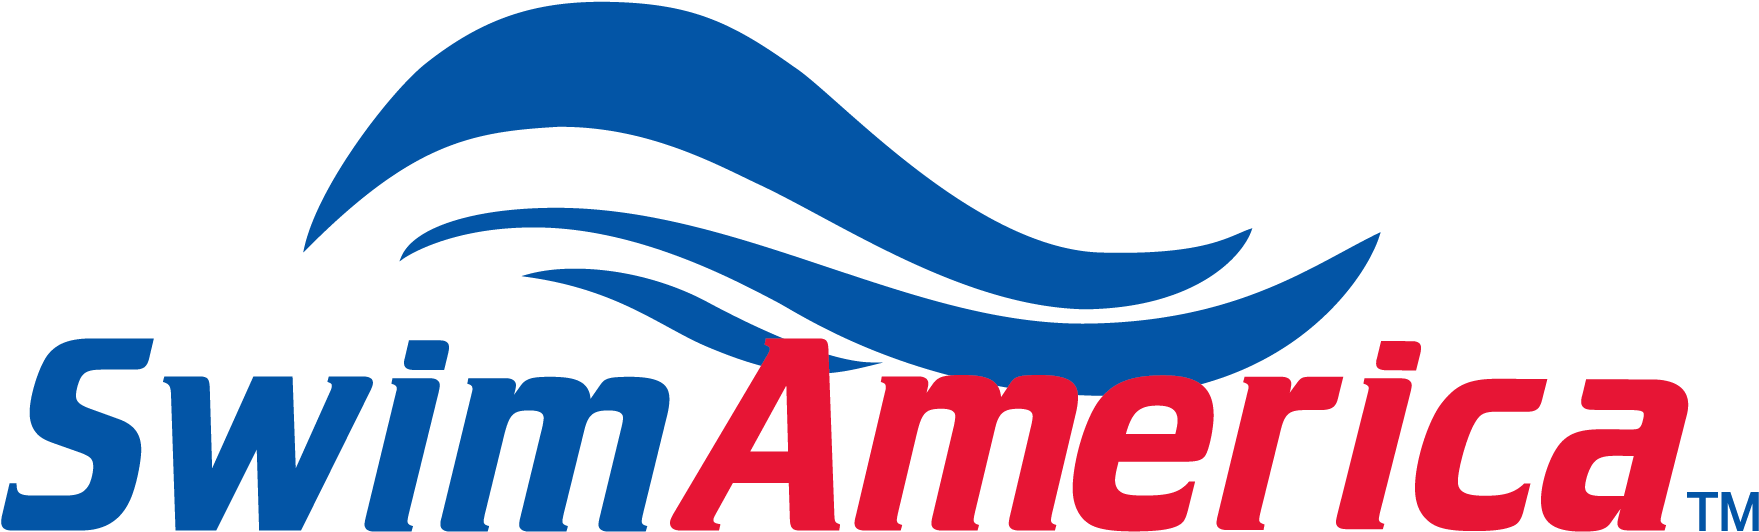 About Streamline Brands - Swim America (1841x667)